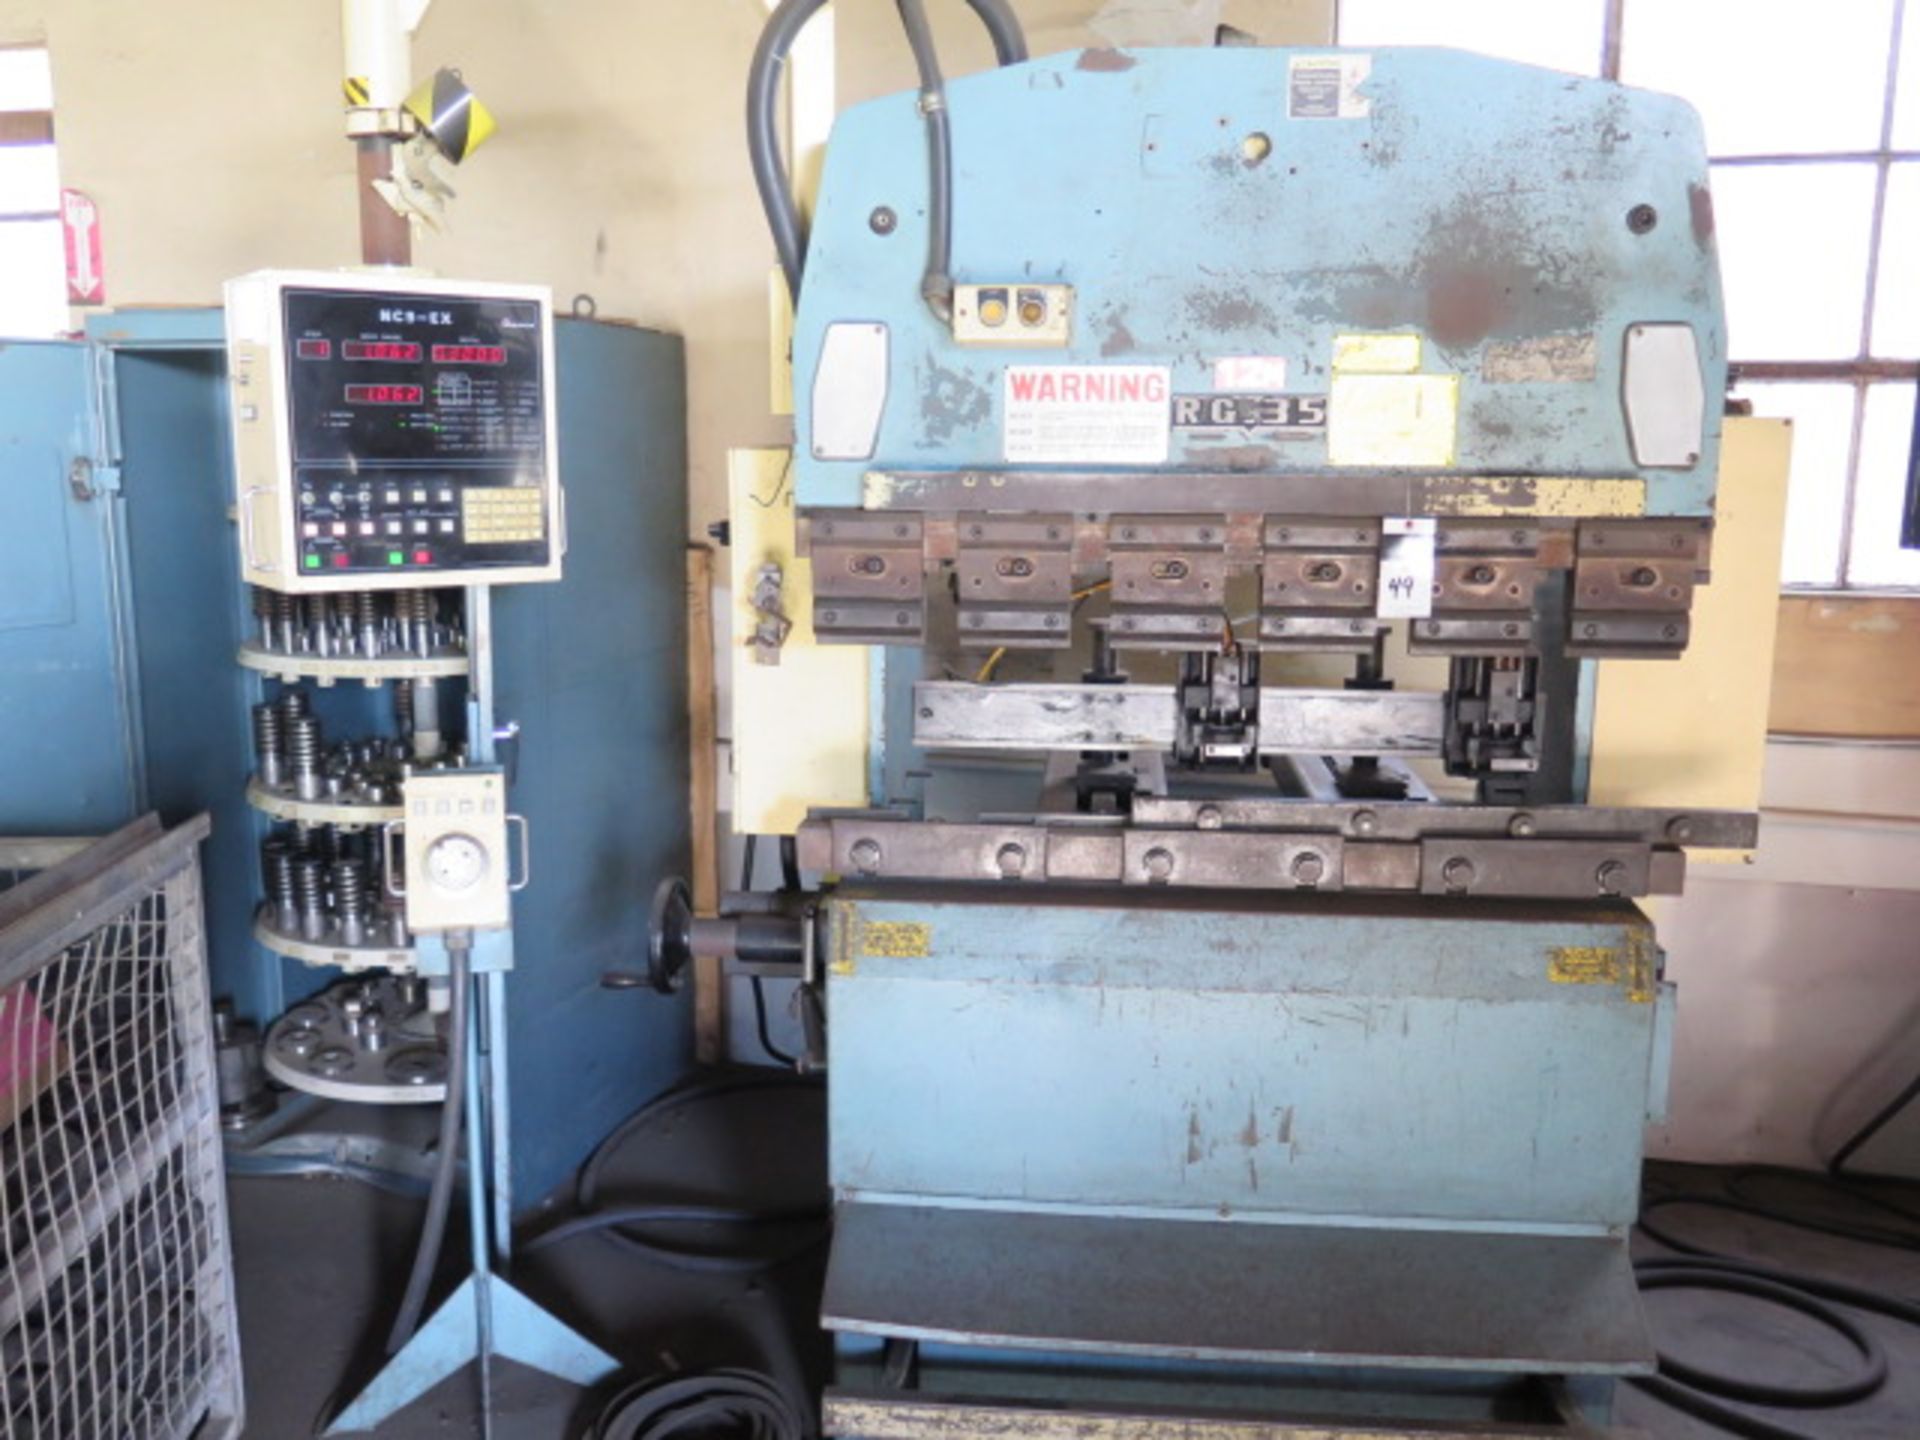 Amada RG-35S 35 Ton x 4’ CNC Press Brake, w/ Amada NC9-EX Controls, 47.3” Bed Length, SOLD AS IS